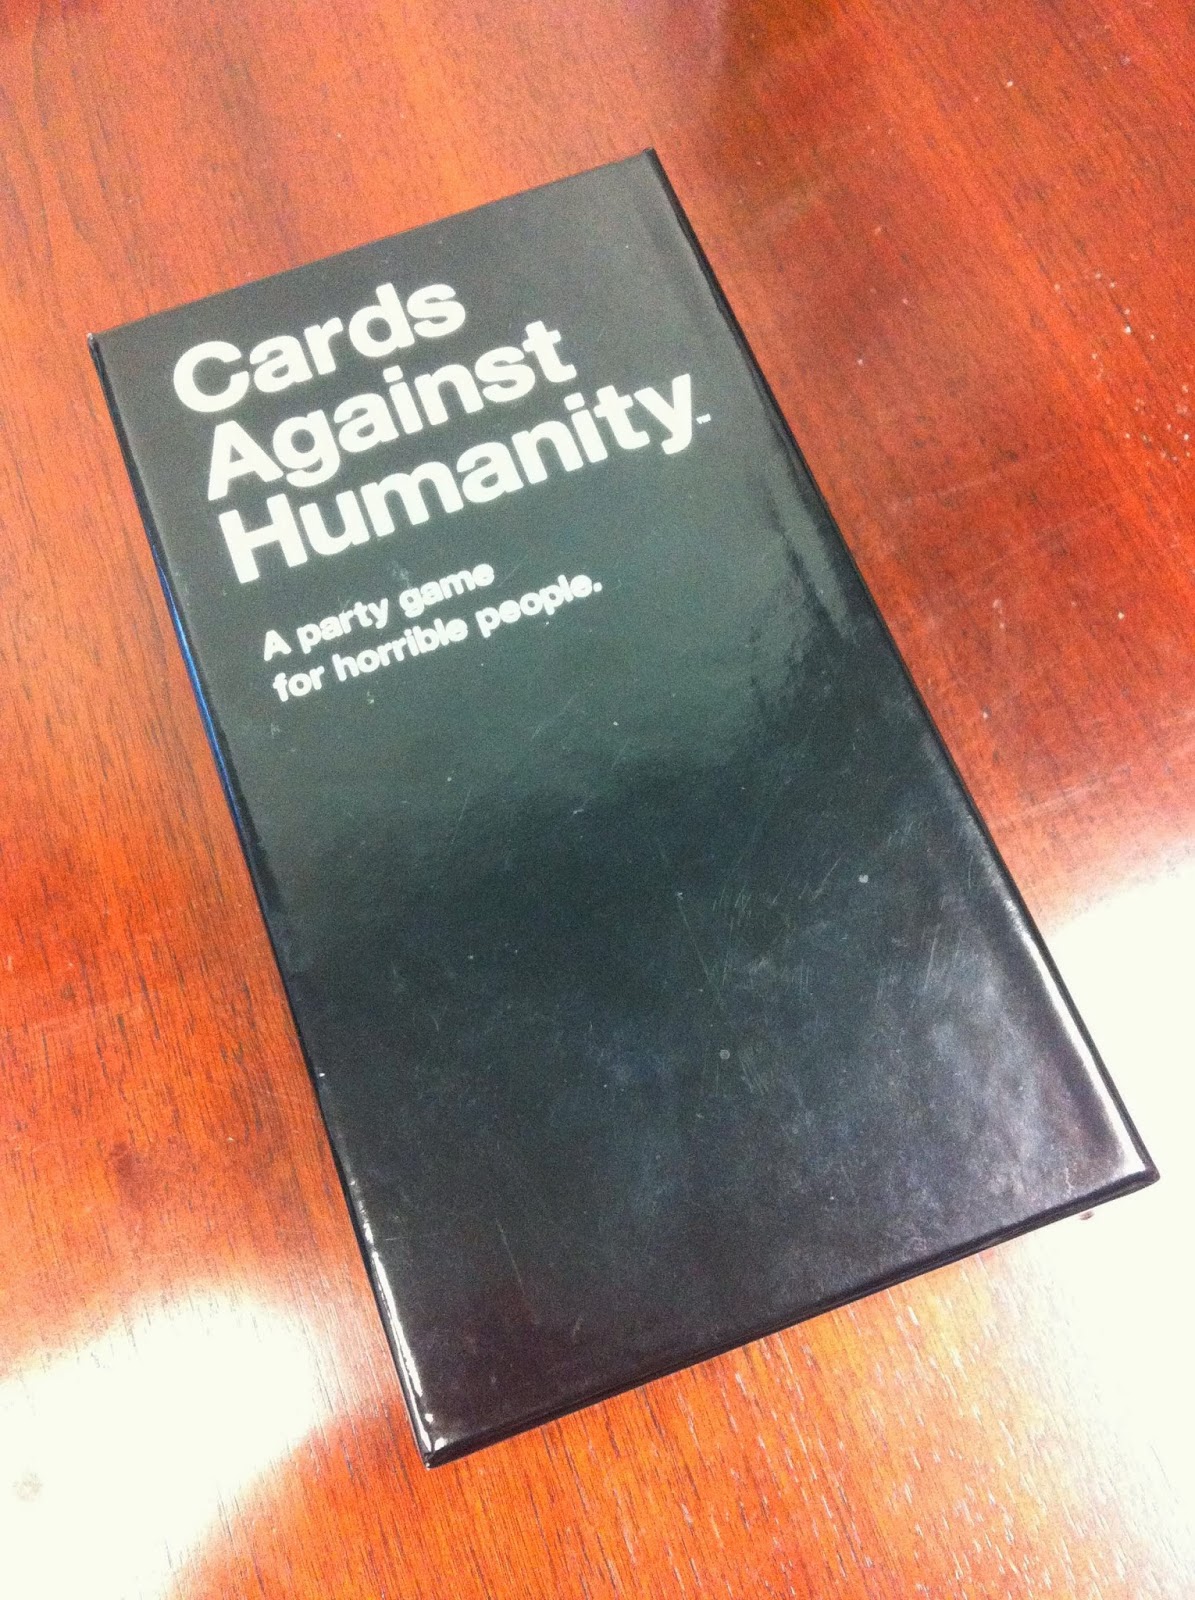 Gameritis: Analog Gaming - Cards Against Humanity